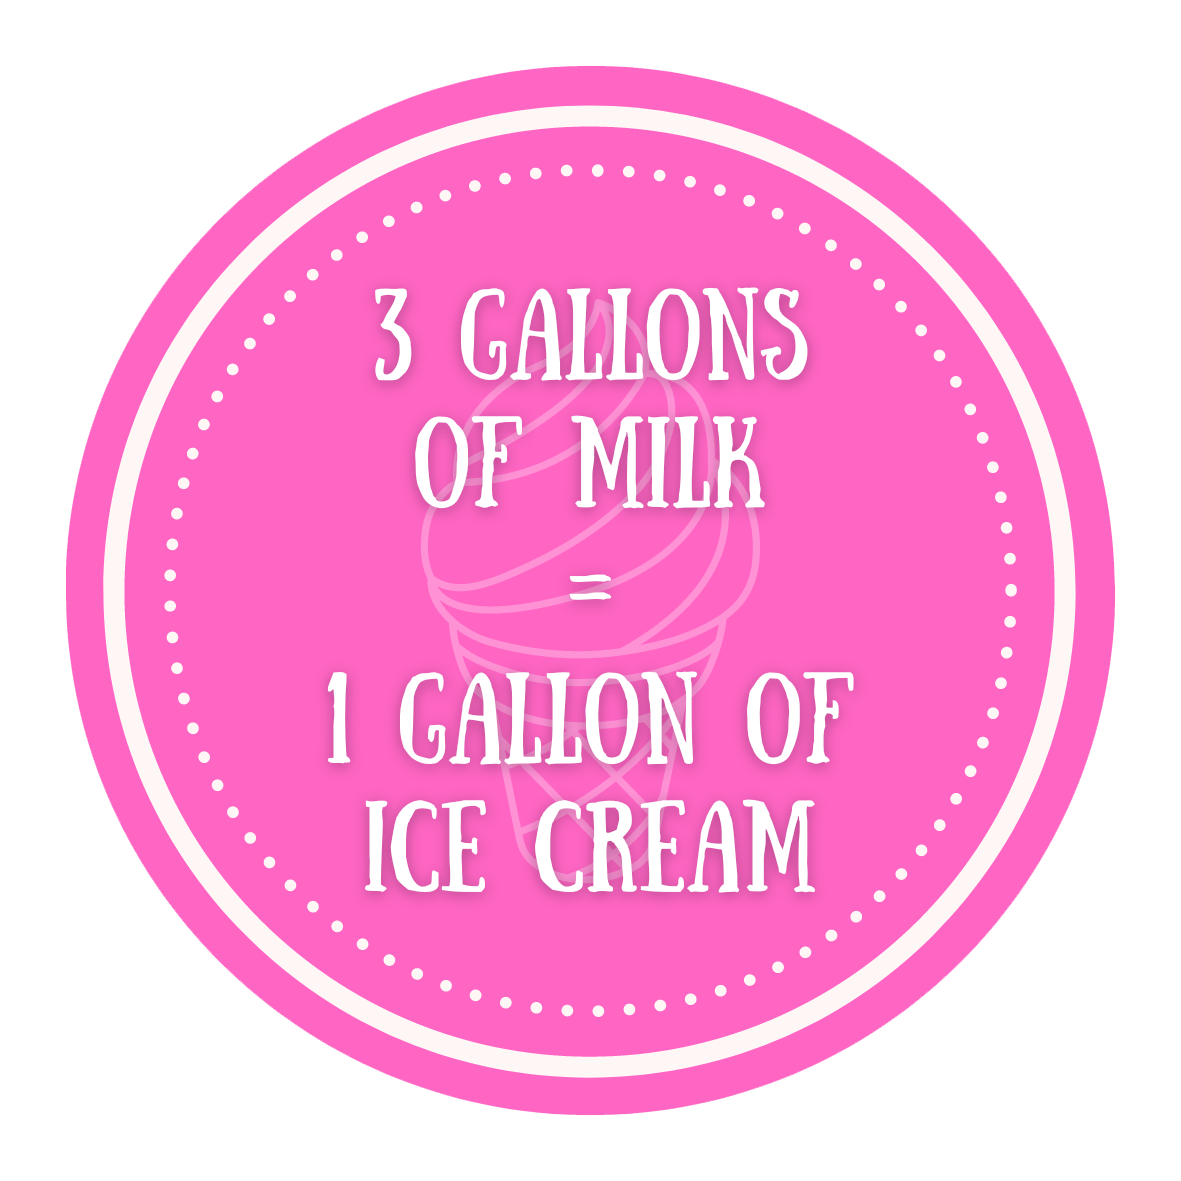 3 gallons of milk = 1 gallon of ice cream